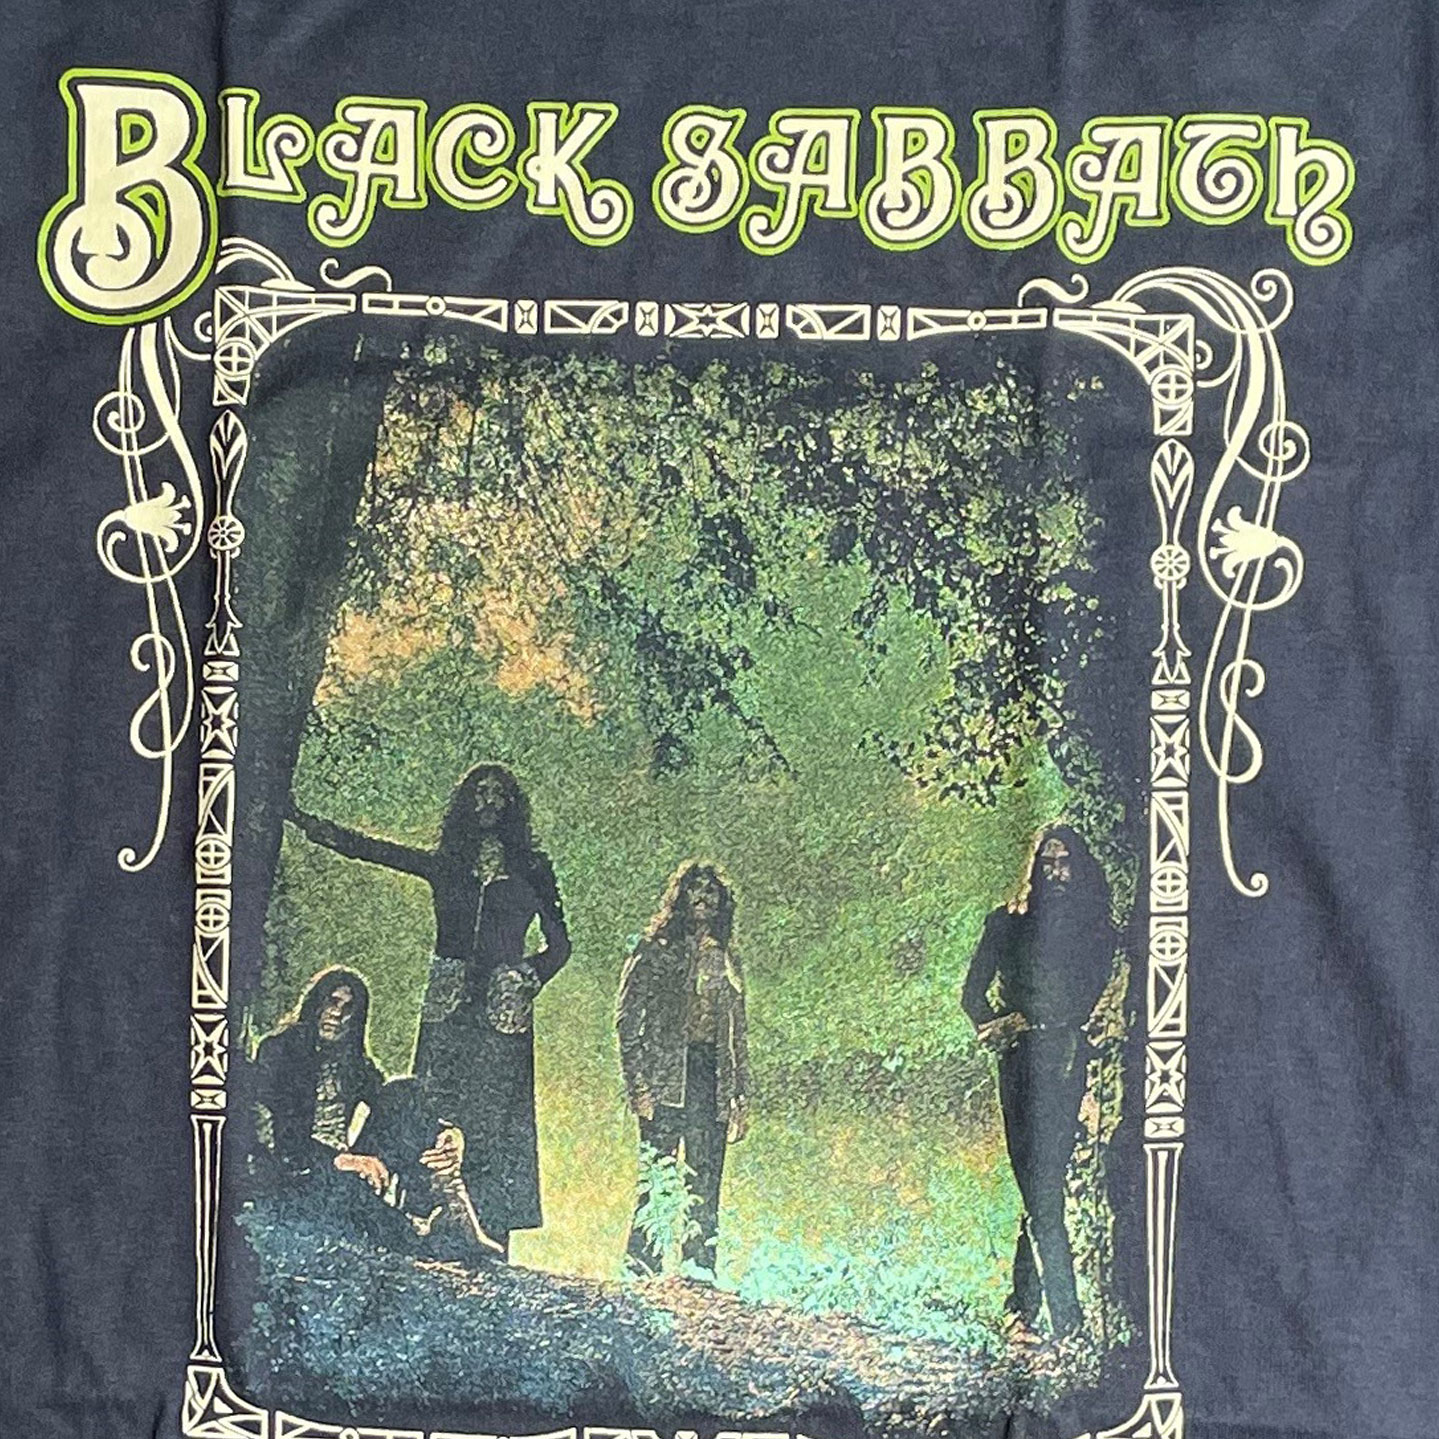 BLACK SABBATH Tシャツ Poster オフィシャル